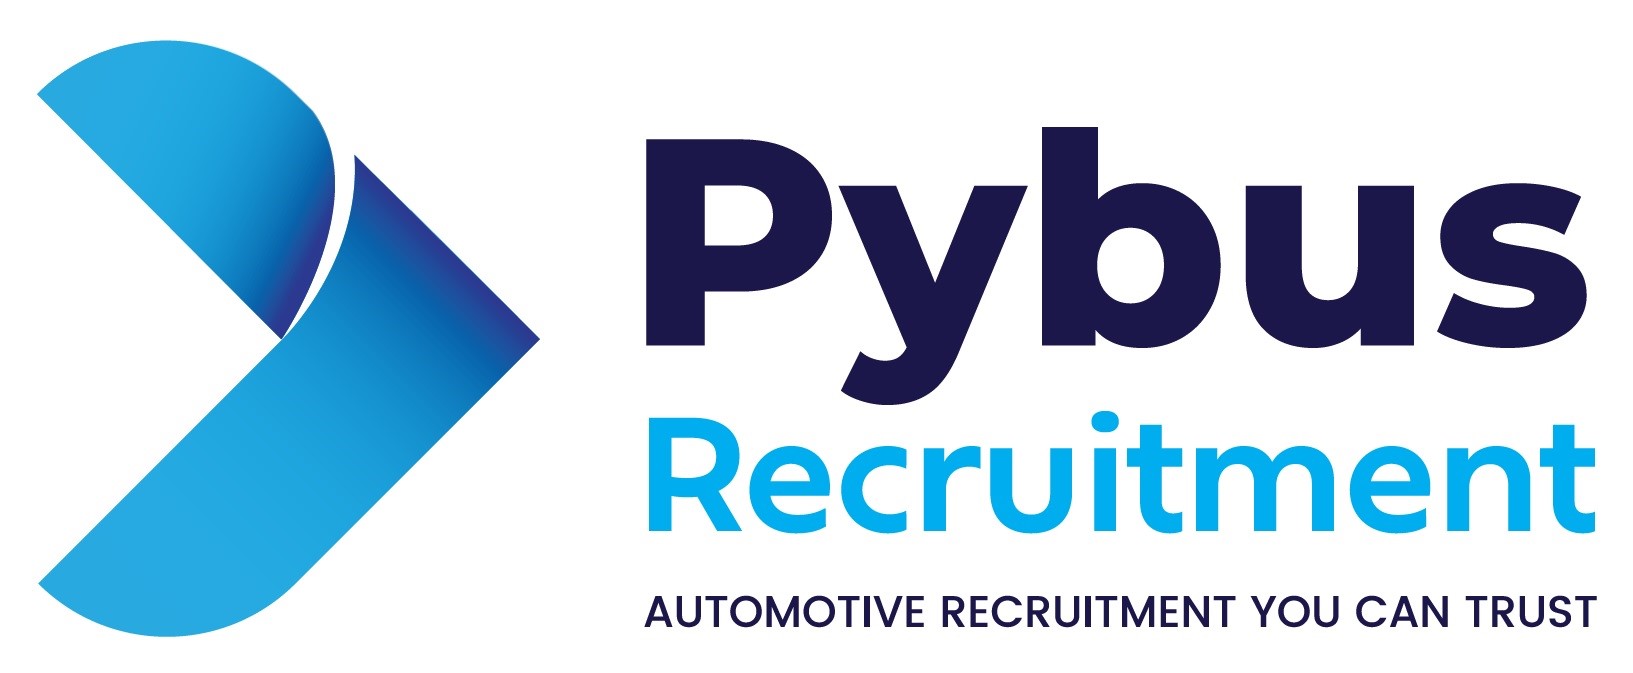 Pybus Recruitment joins the NBRA